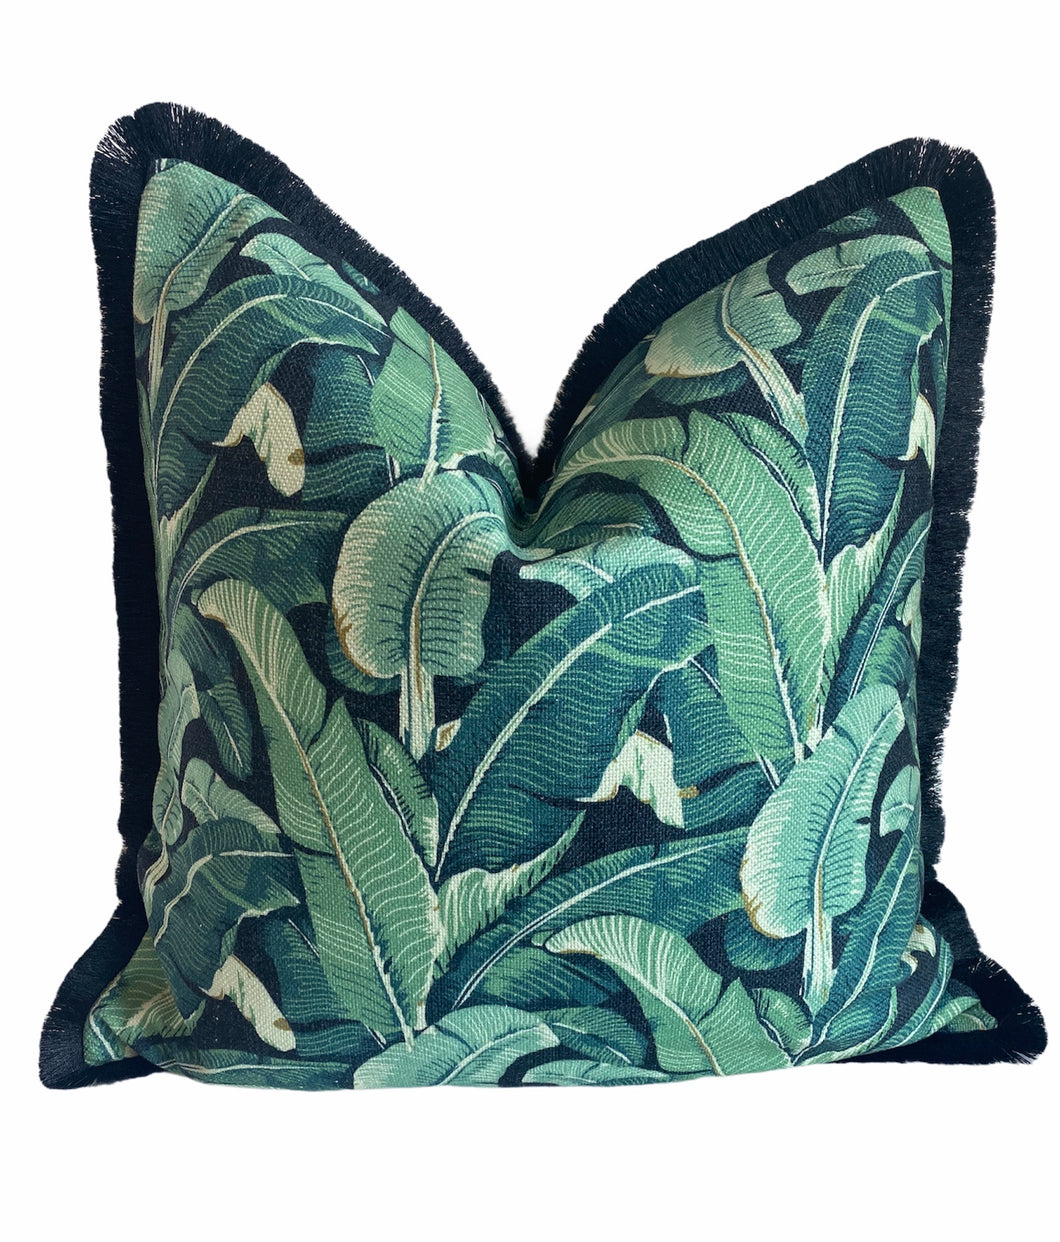 Light Green Banana Leaf Cushion SKU 12348544 | Pillow Tropical Print Black Fringe